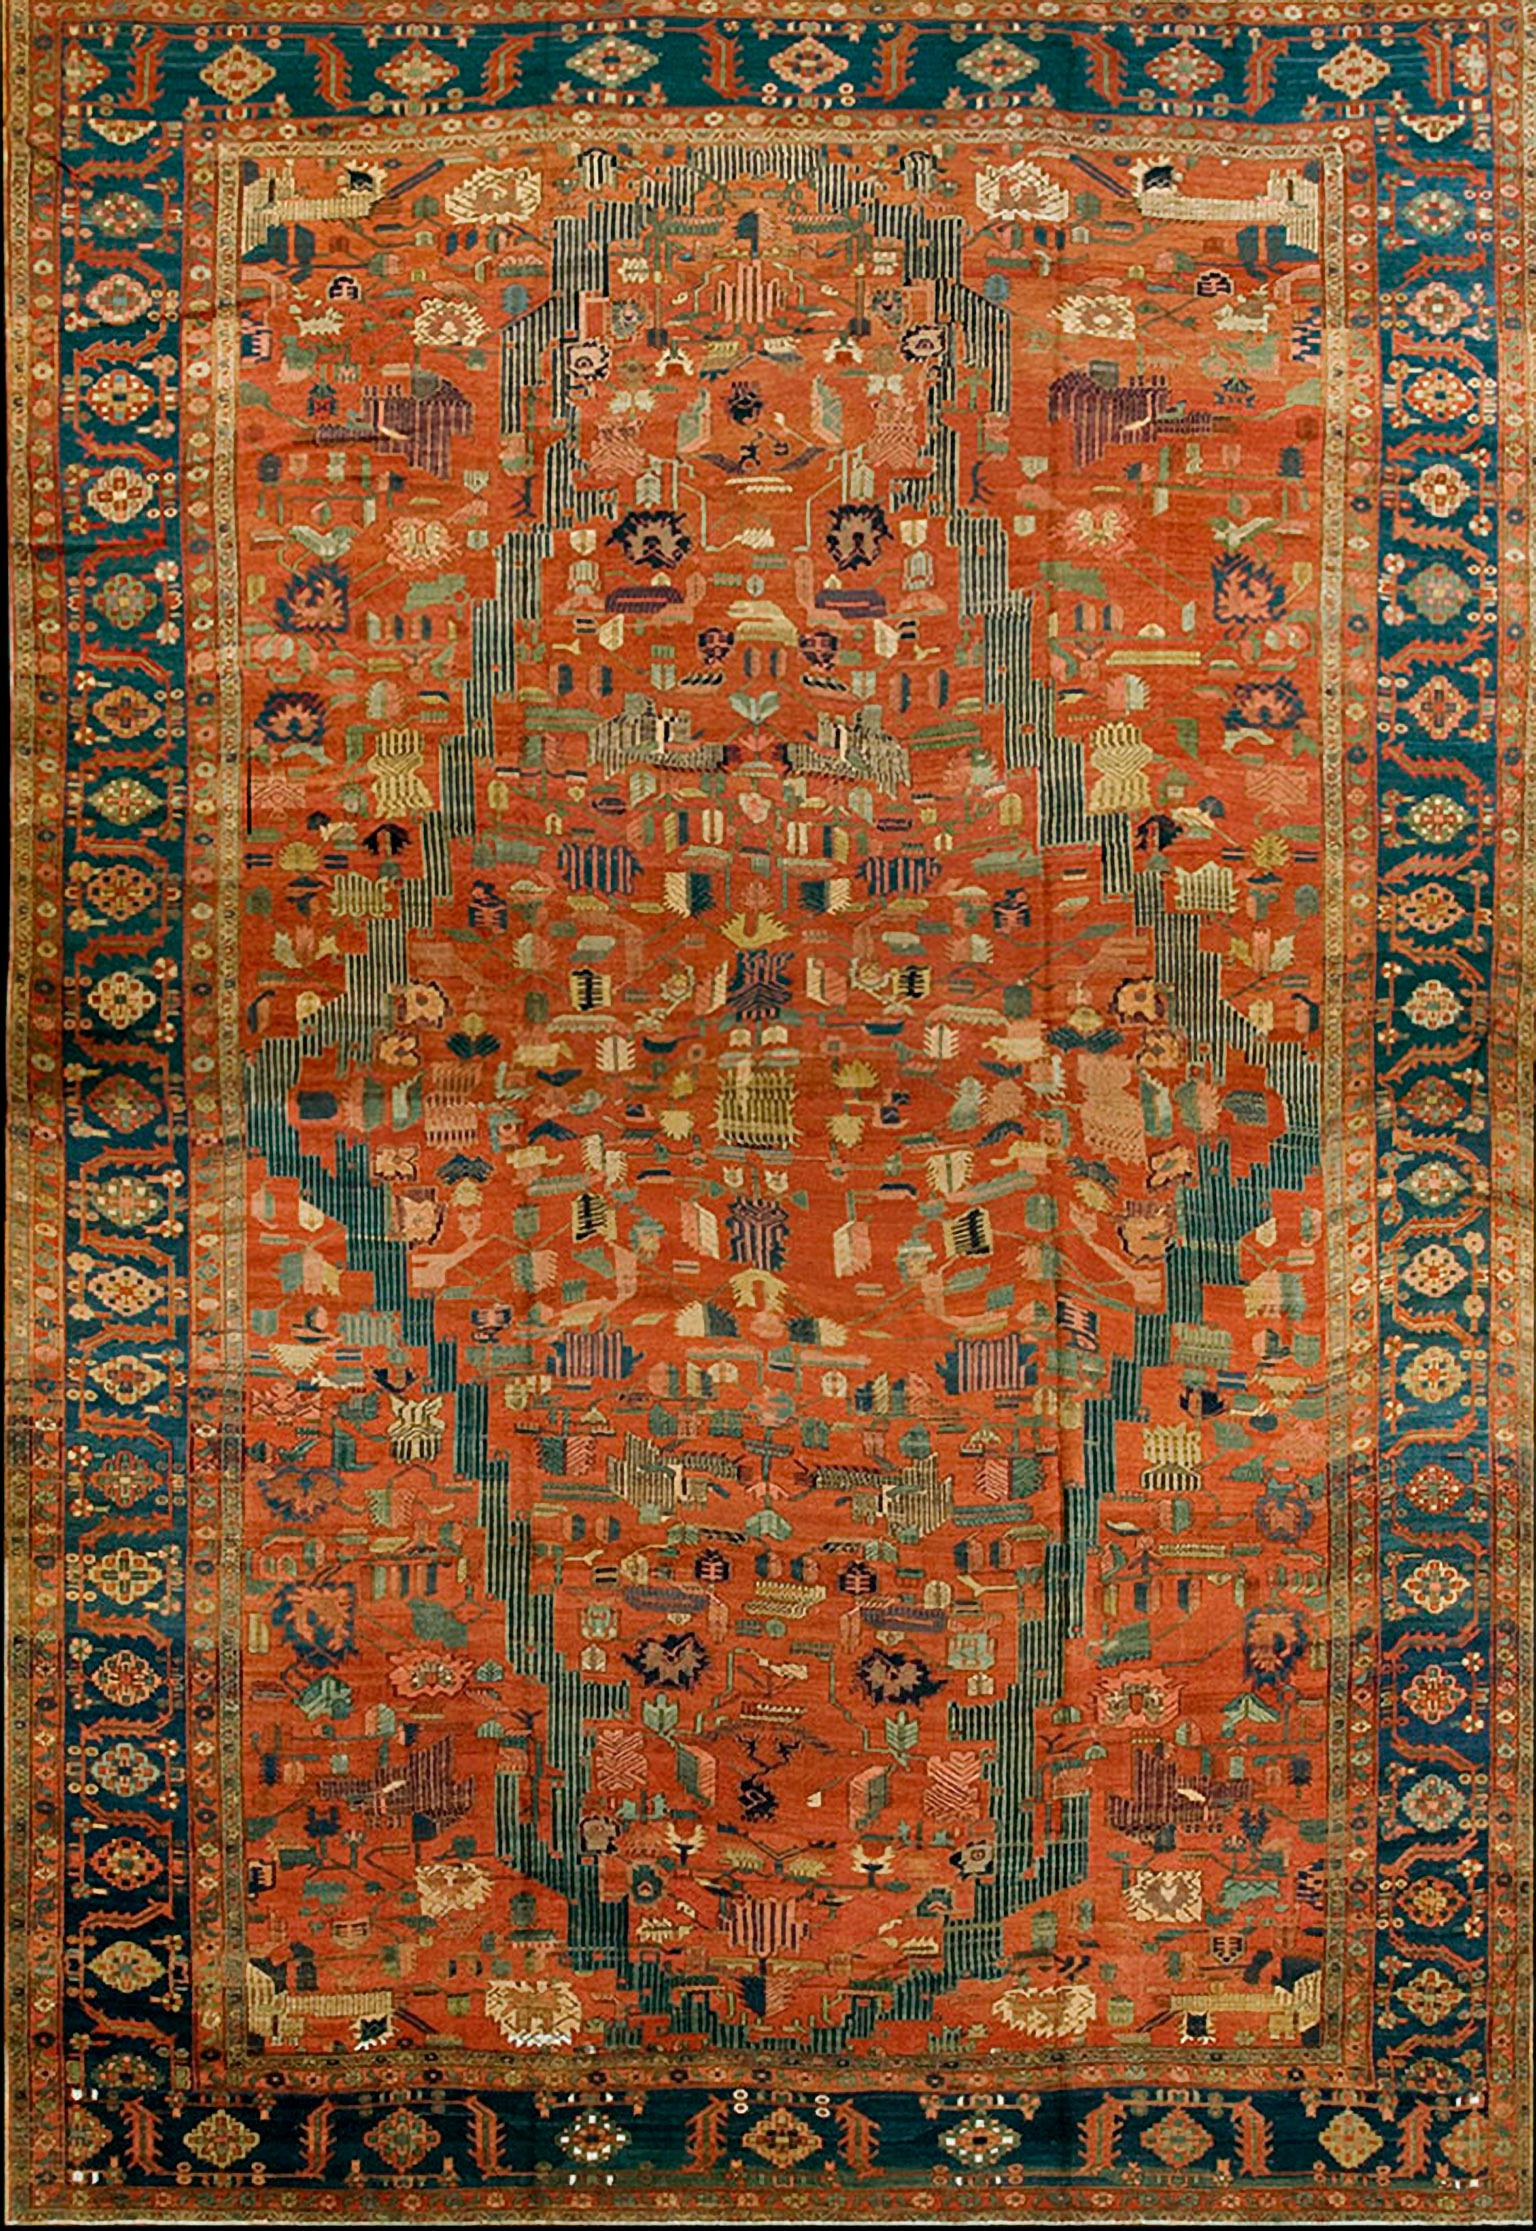 19th Century N.W. Persian Bakshaiesh Carpet ( 14'10" x 21'6" - 452 x 655 )